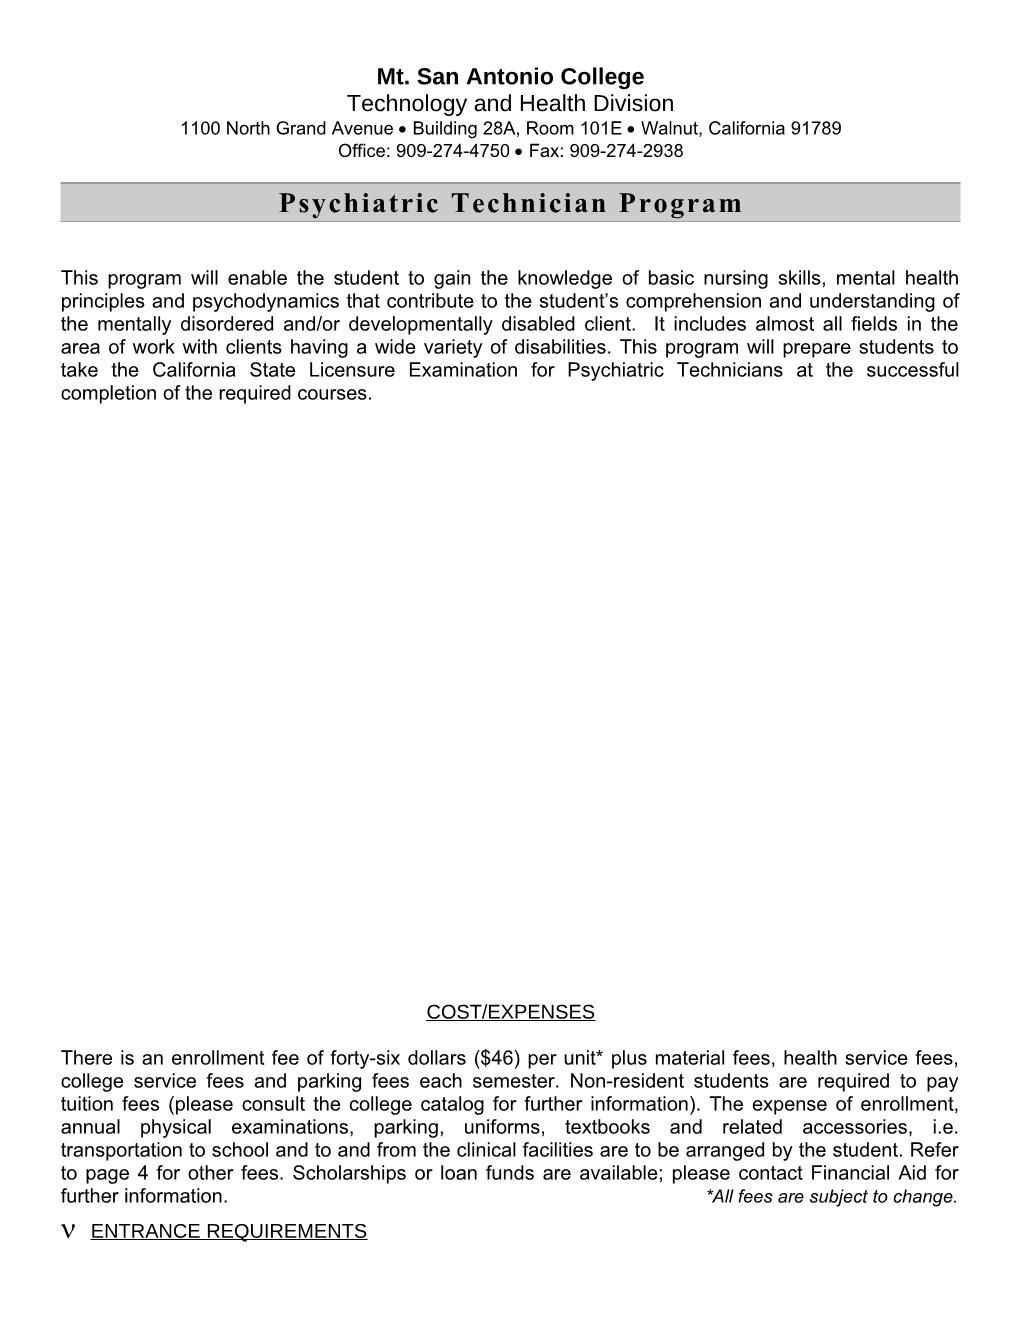 MENTAL HEALTH/PSYCHIATRIC TECHNICIAN Programpage 1